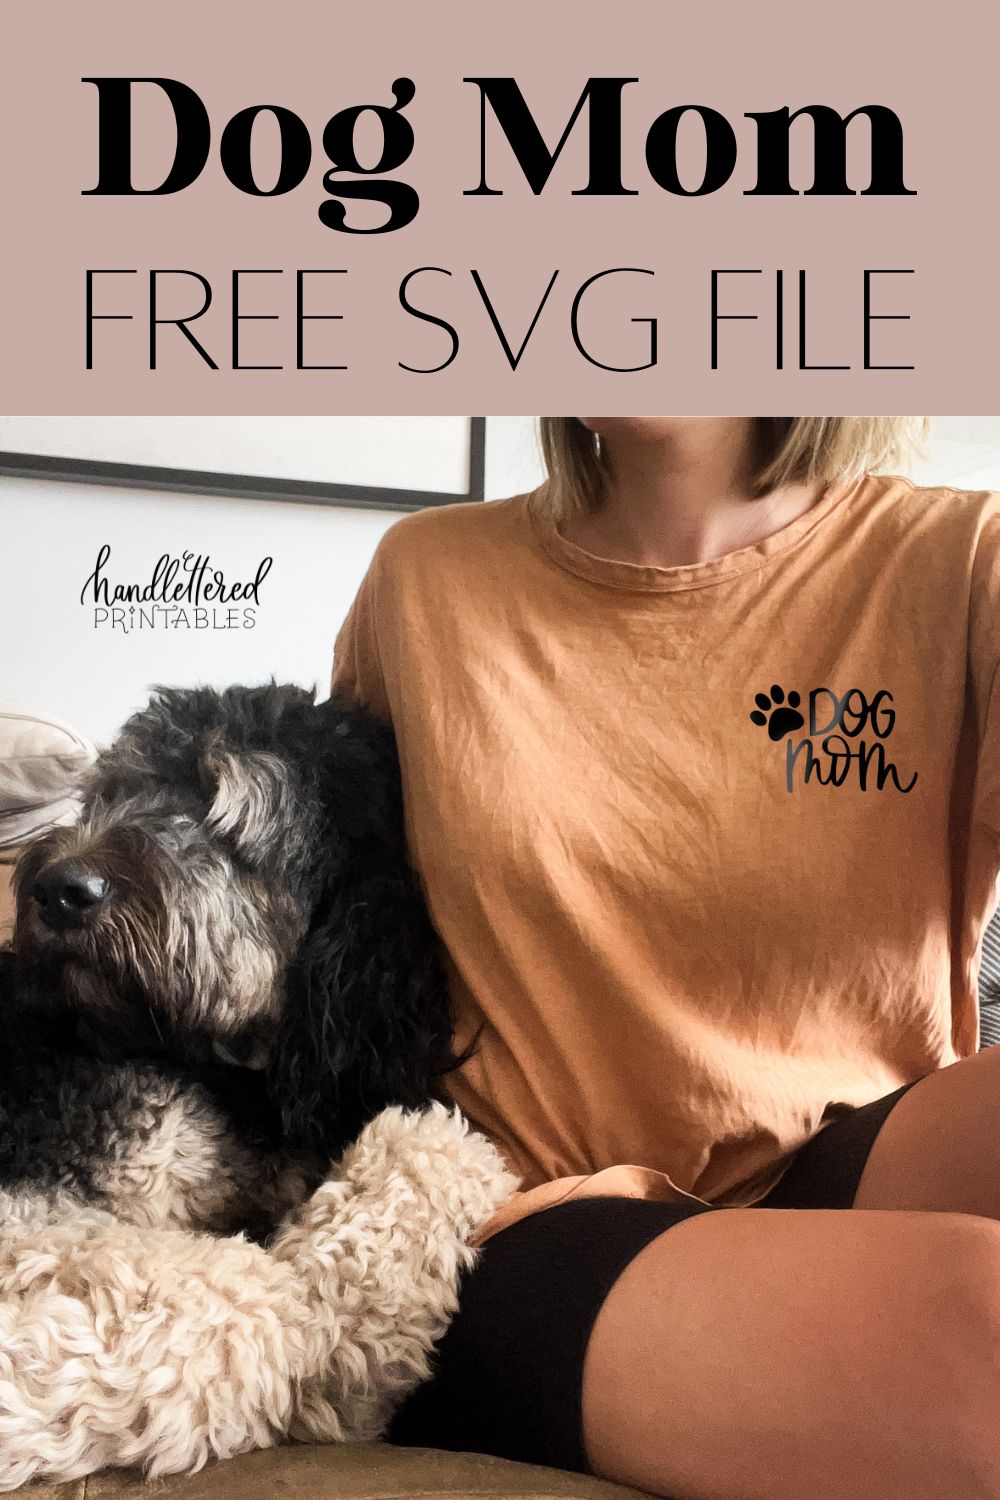 Dog Mom free SVG file shown on shirt, girl beside dog